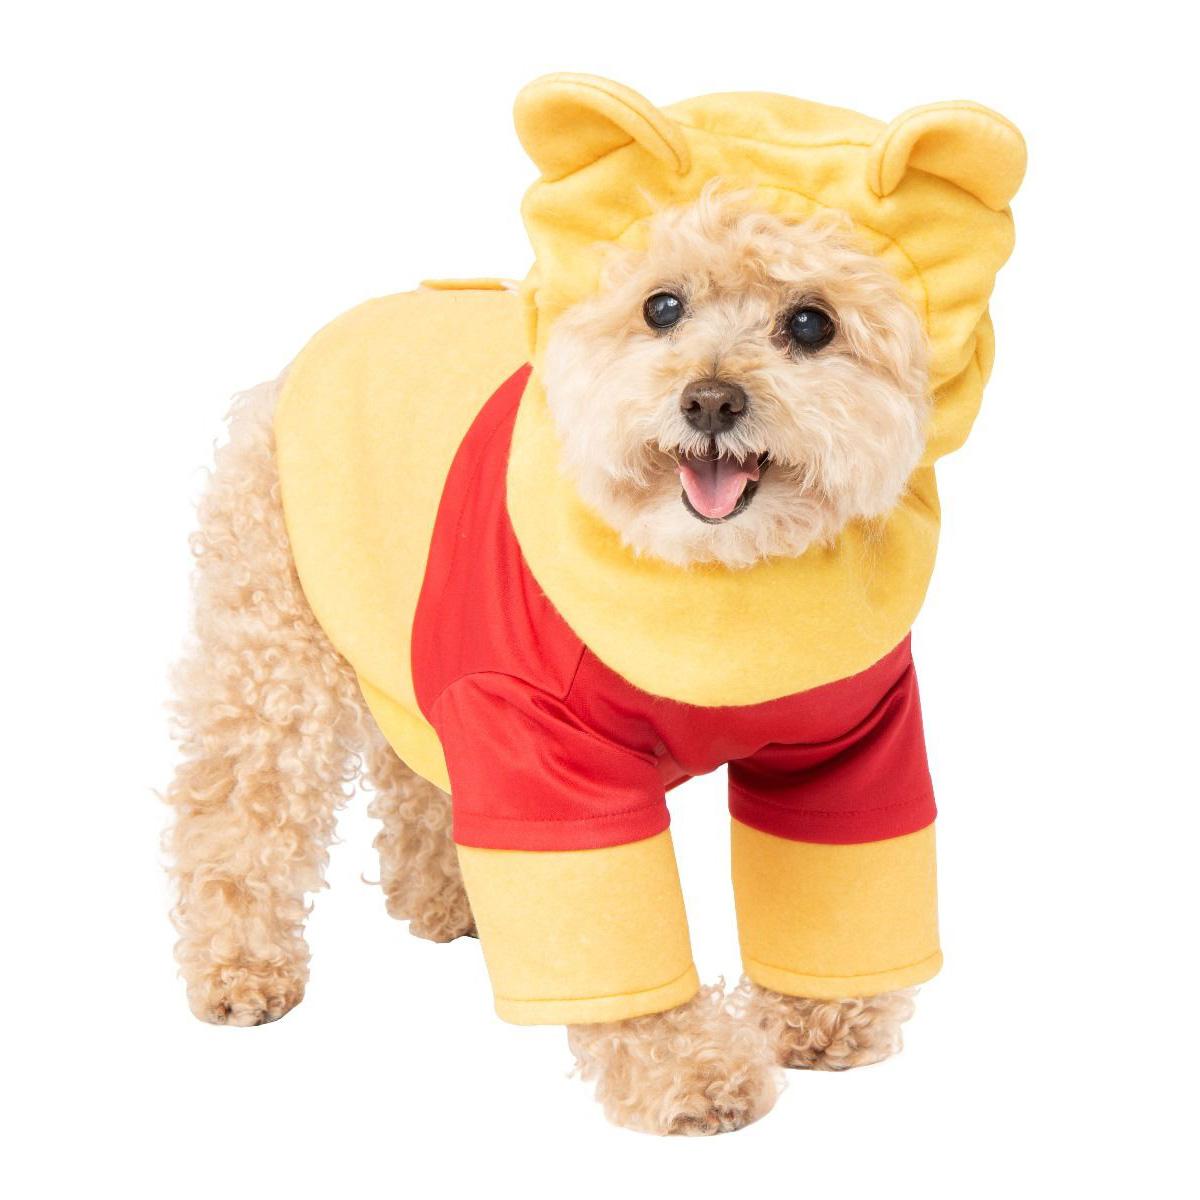 Winnie The Pooh Dog Costume by Rubies